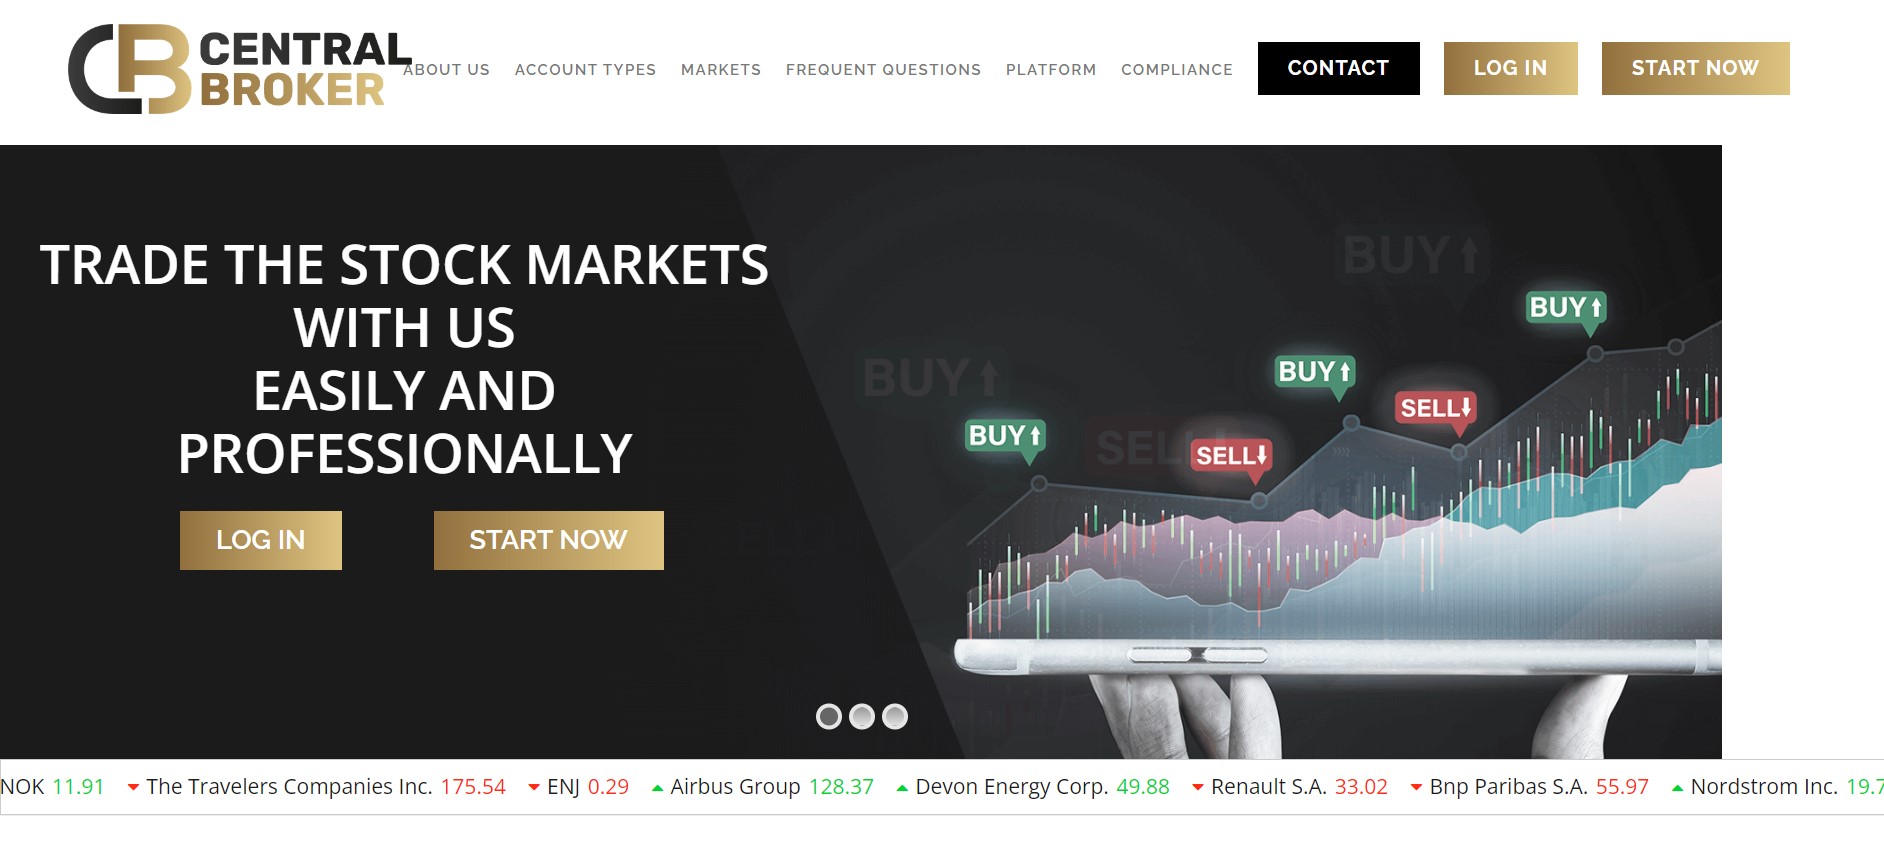 Central Broker website